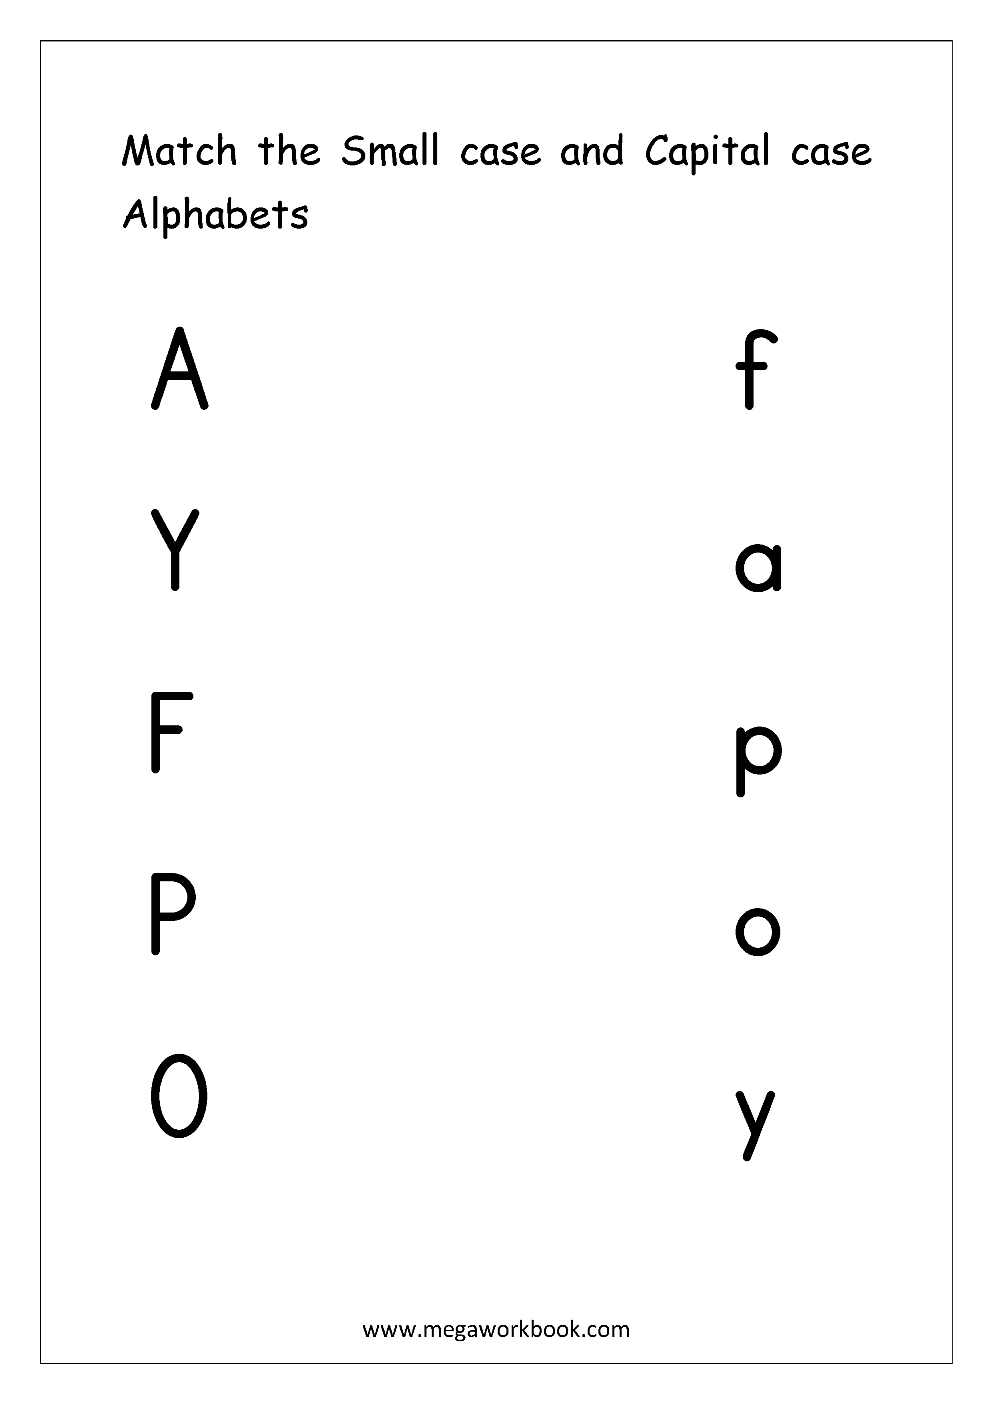 Free English Worksheets  Alphabet Matching  Megaworkbook